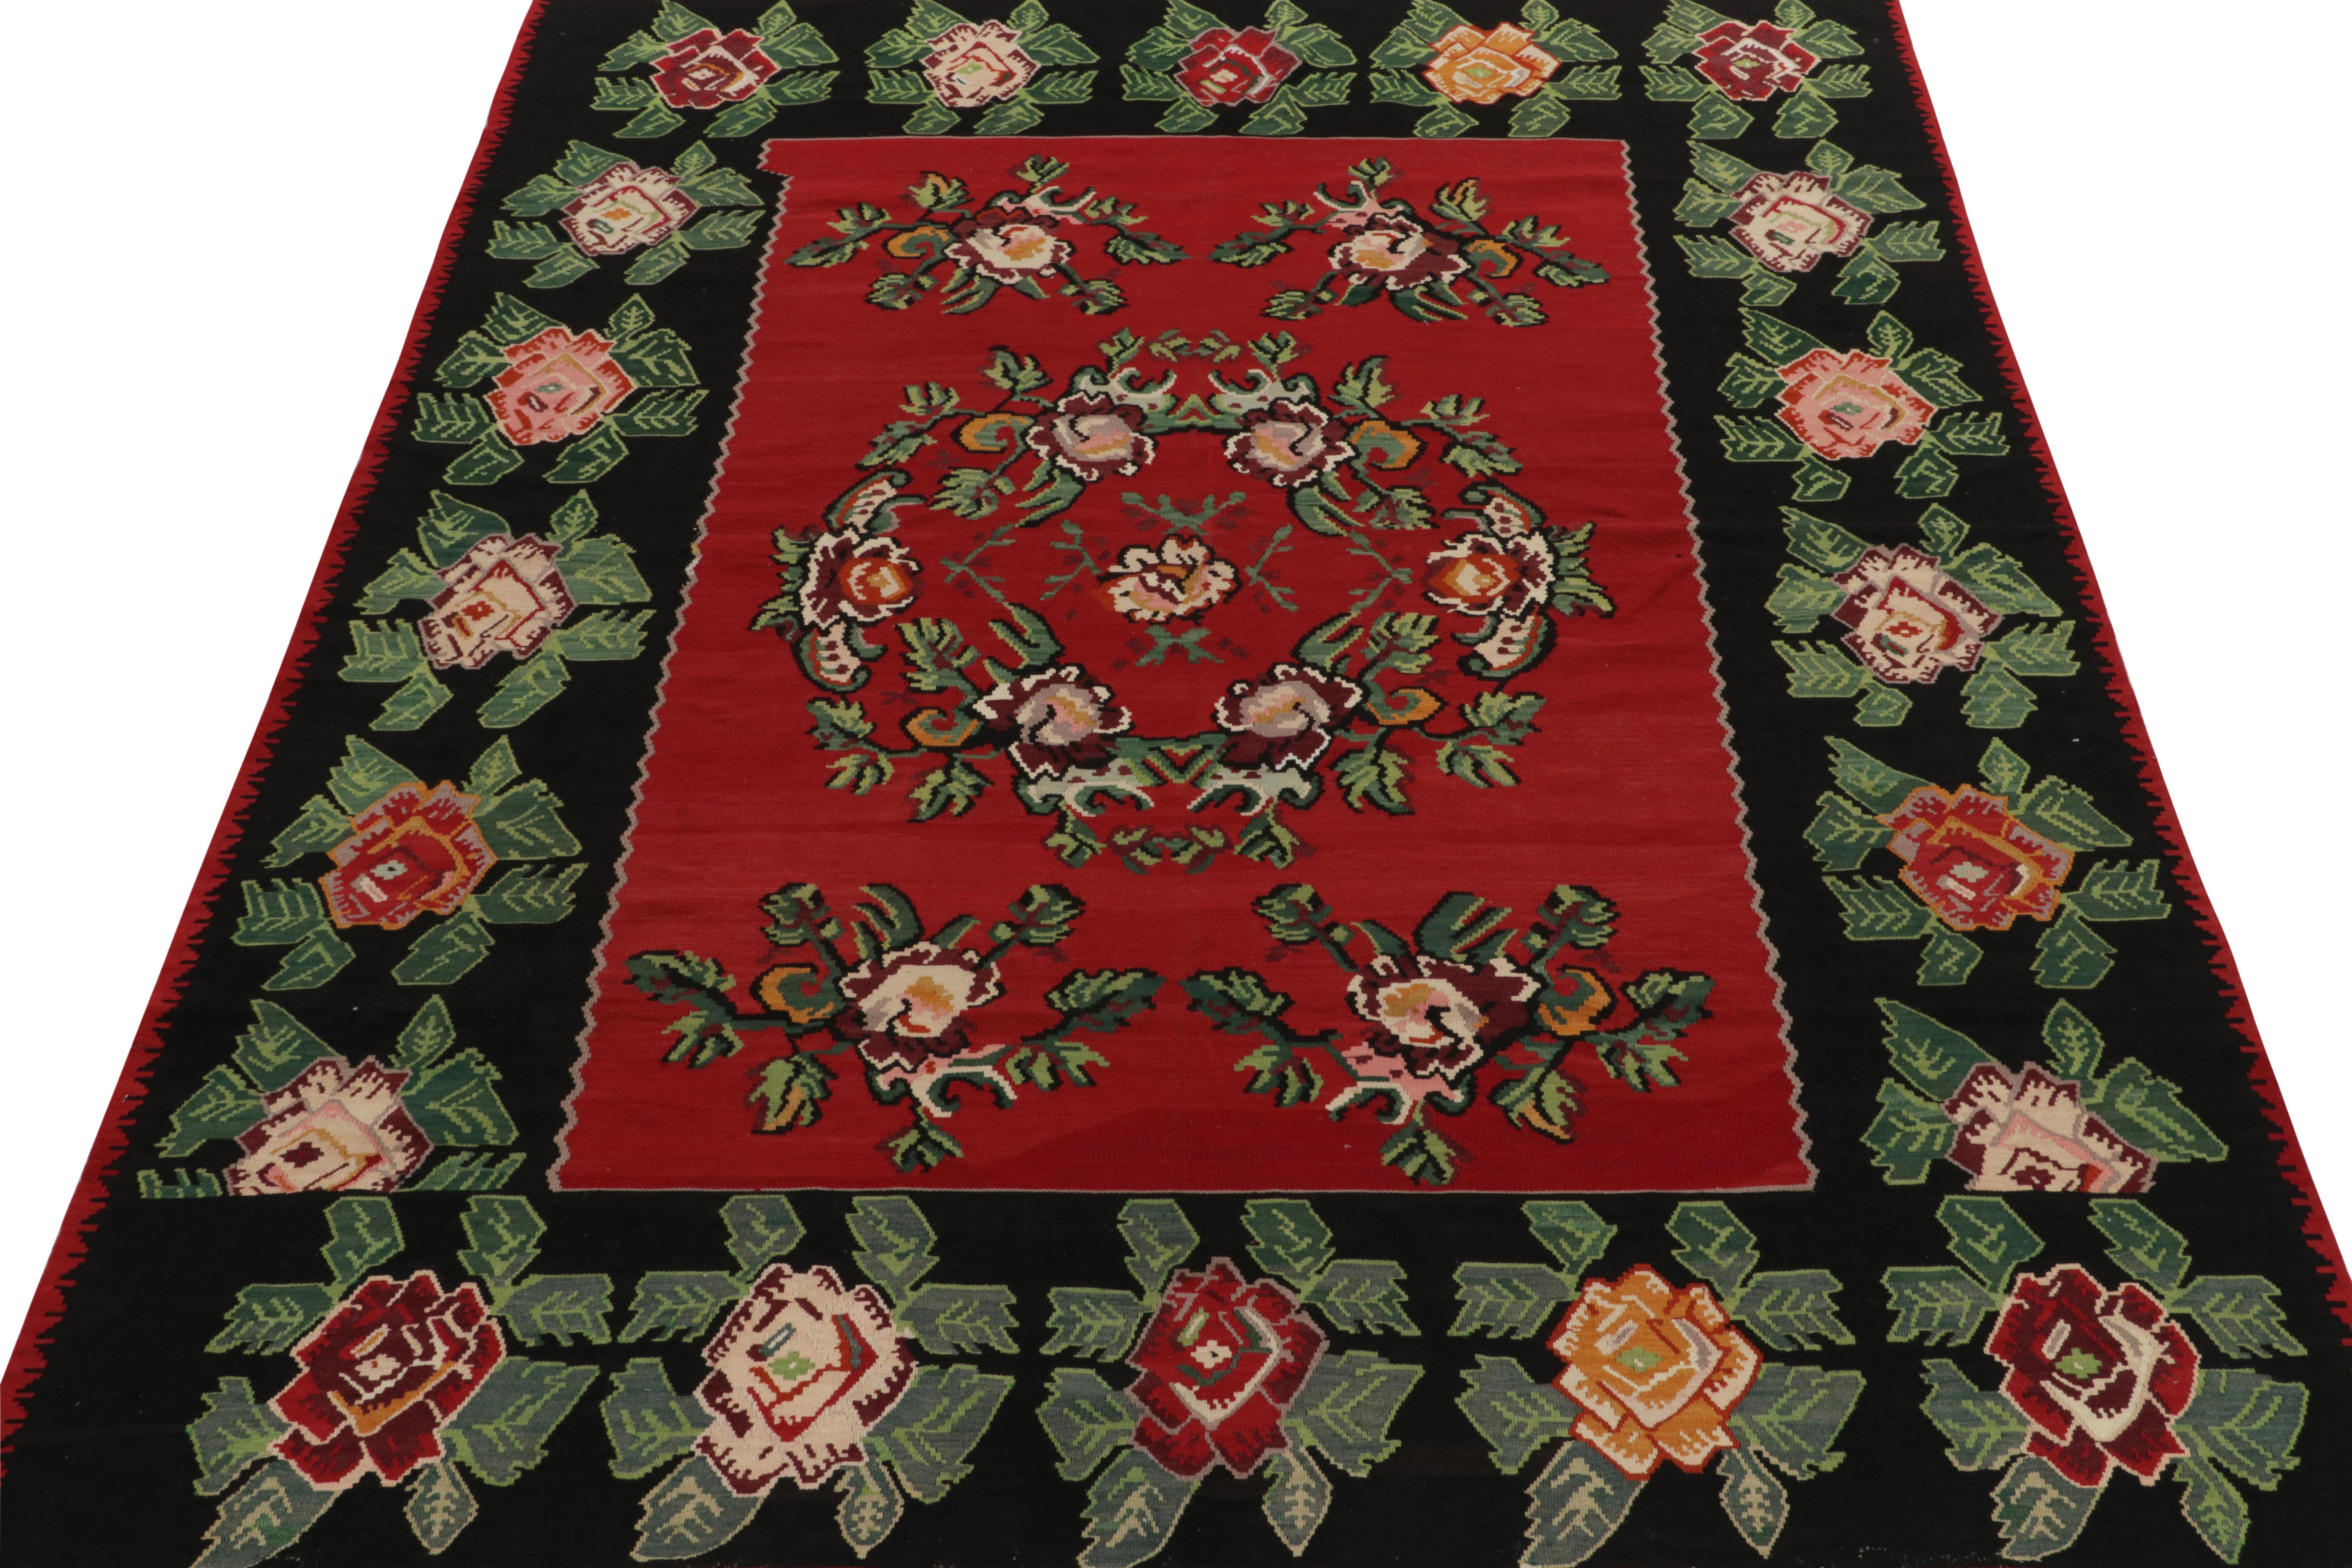 Hand-Woven Midcentury Vintage Kilim Black Red Floral Turkish Flat-Weave Rug by Rug & Kilim For Sale